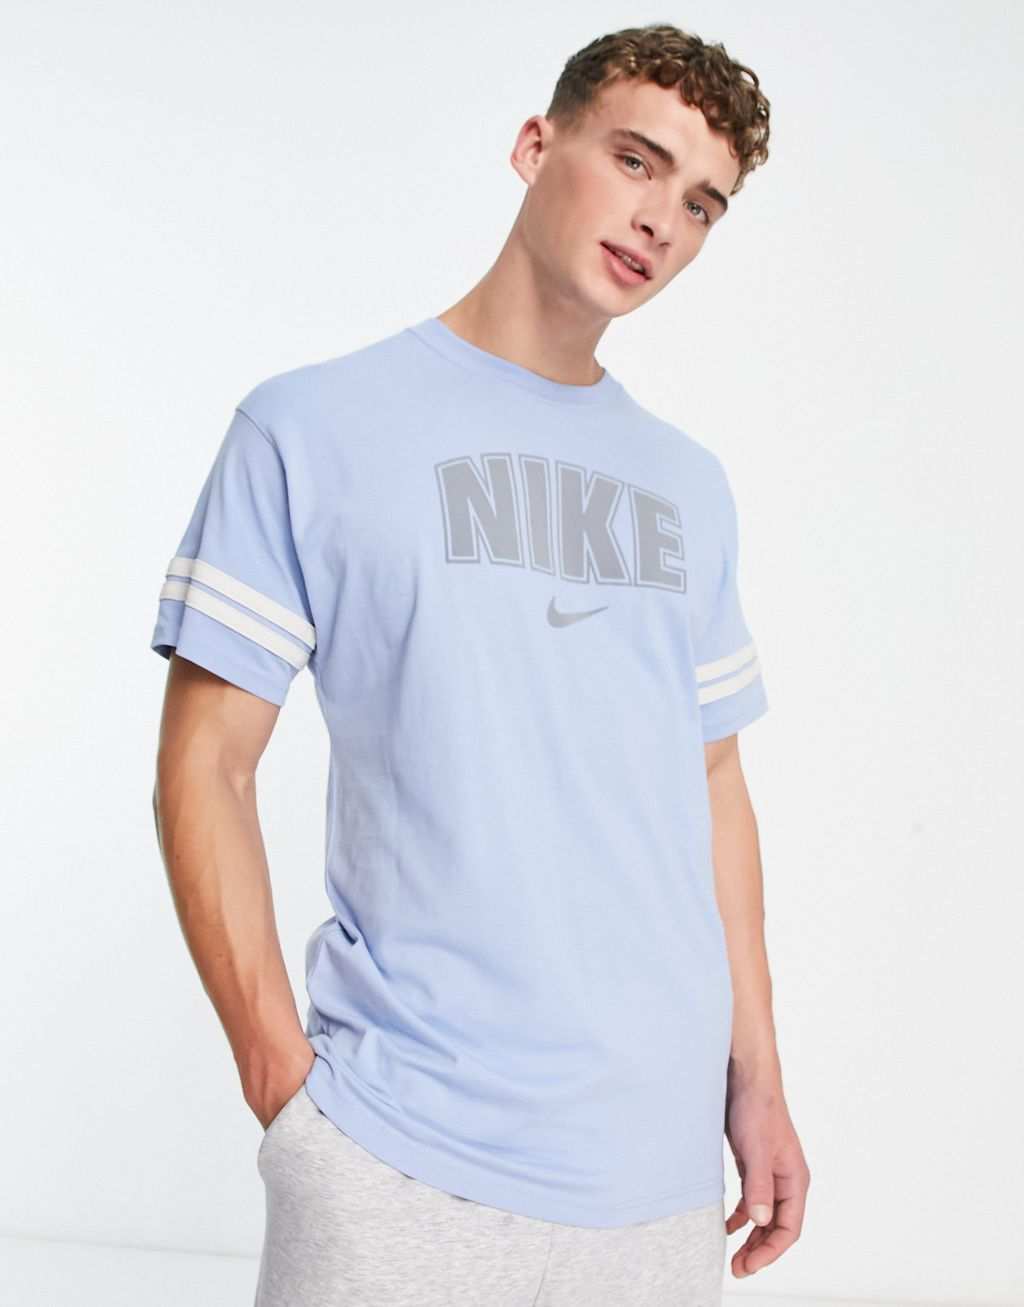 Синяя футболка с ретро-принтом на груди Nike футболка nike темно дымчатого цвета с принтом на груди в стиле ретро